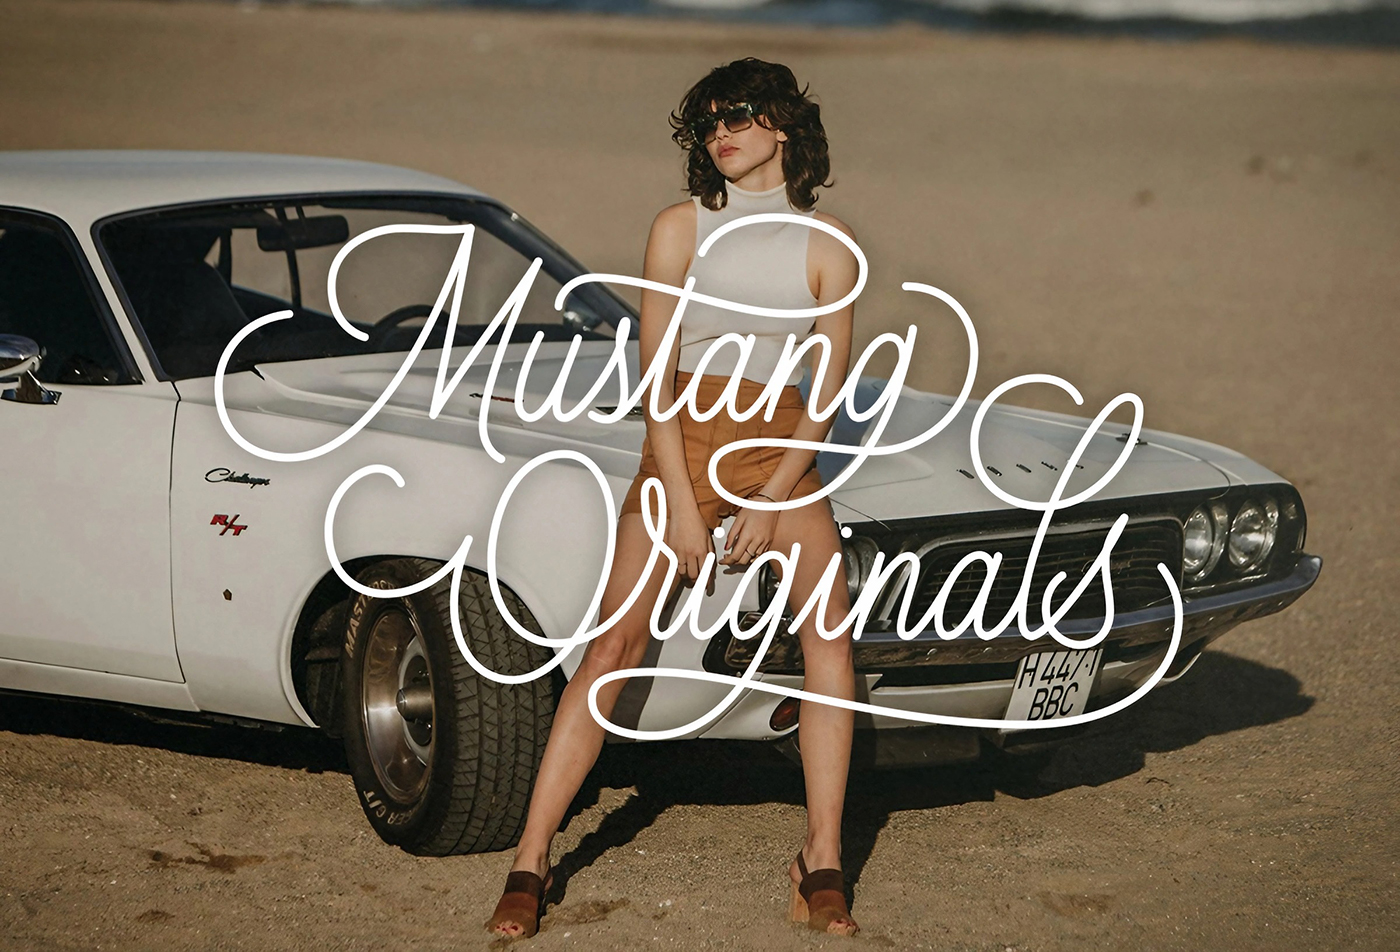 Mustang Attitude campaña 2015 - Diseño de etiquetas para calzado Mustang - Estudio de diseño gráfico Valencia Pixelarte